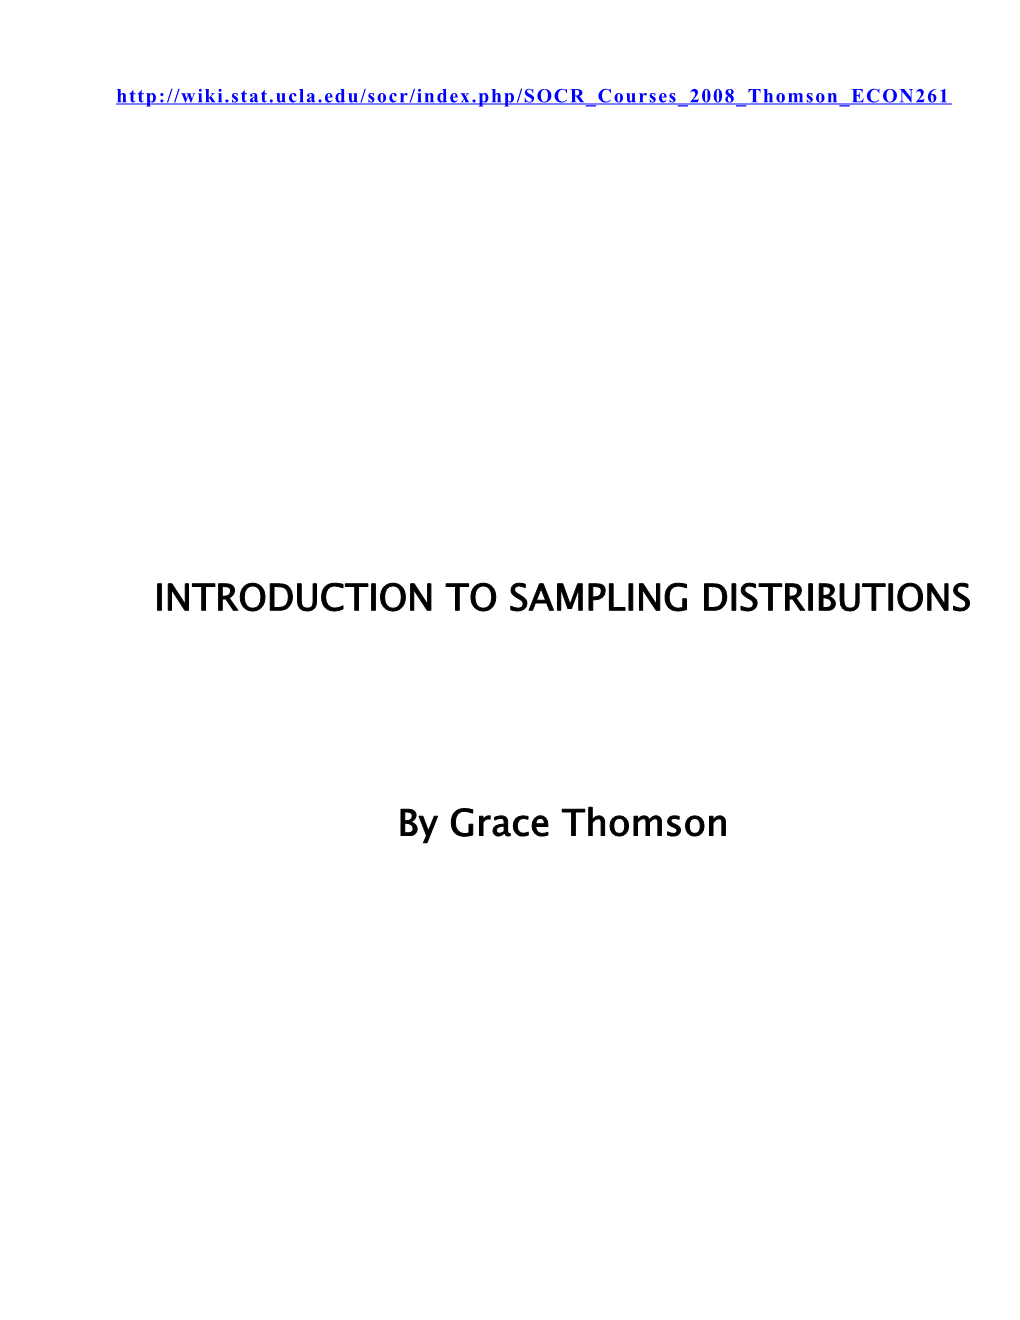 Introduction to Sampling Distributions